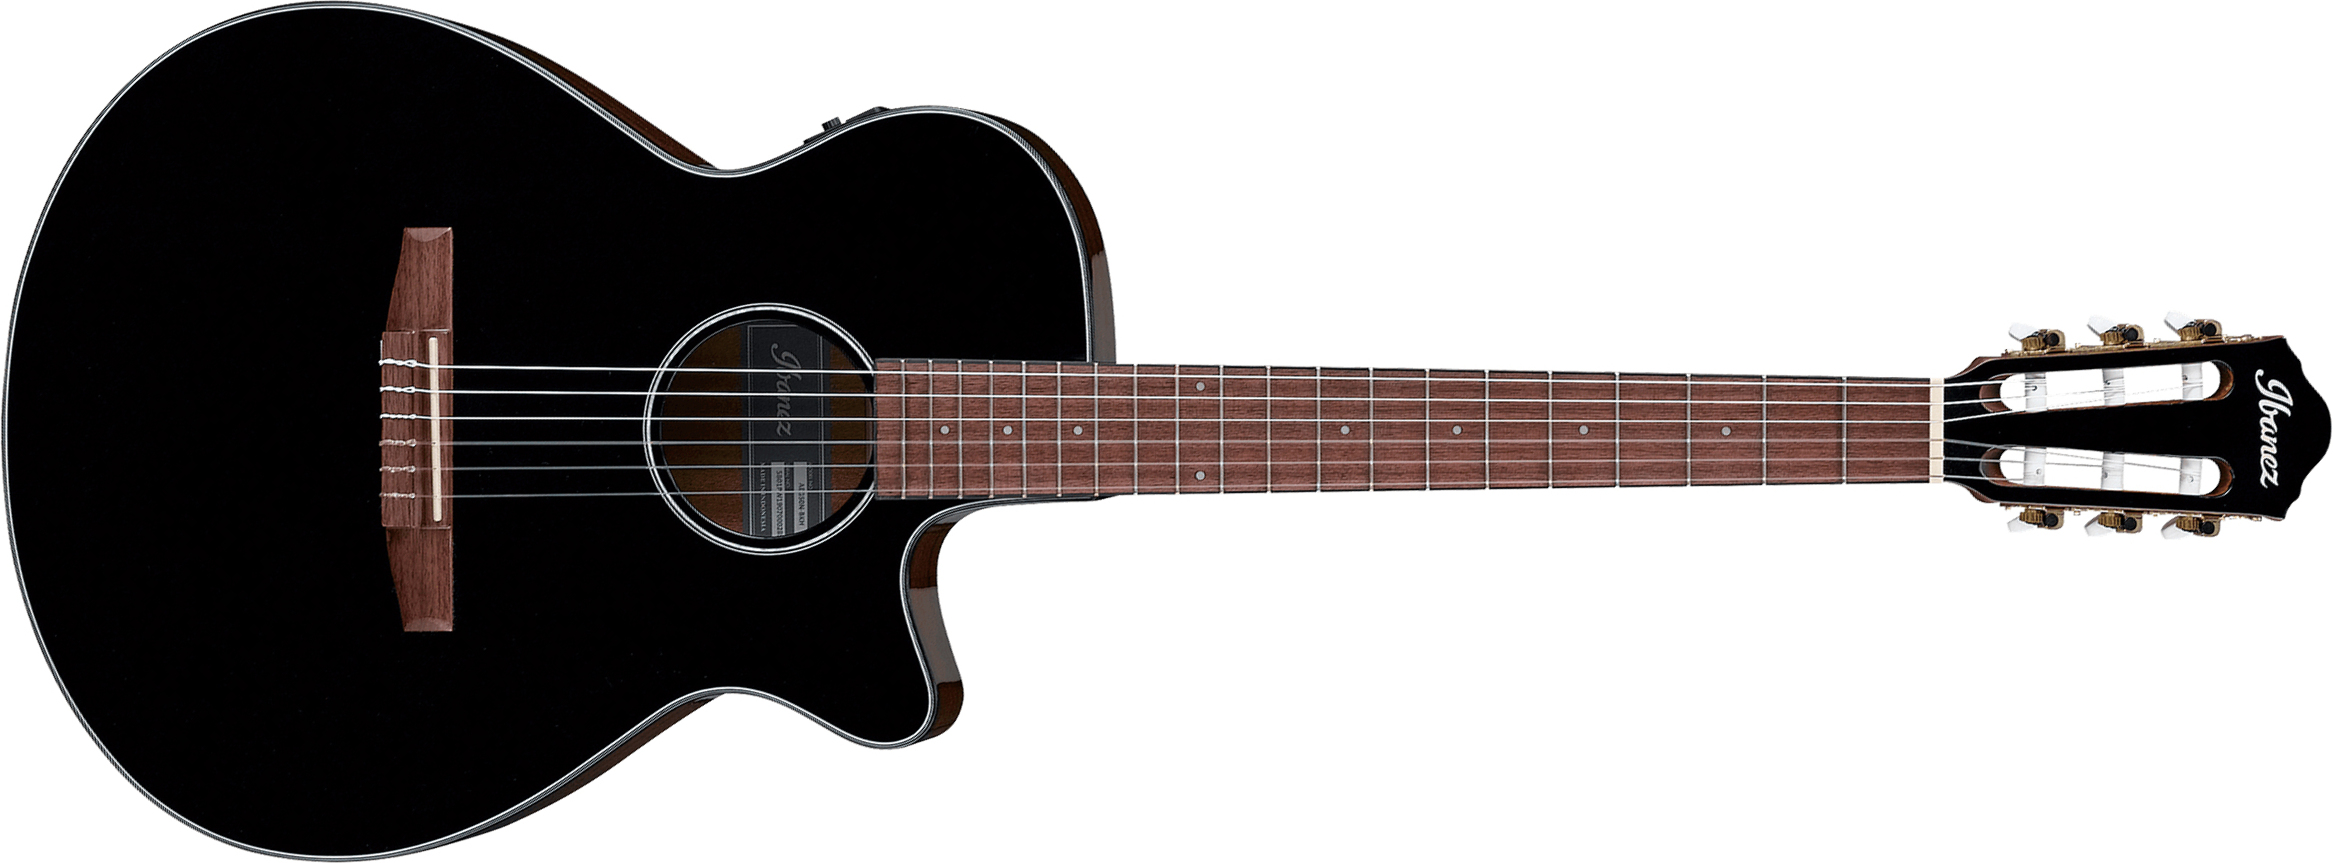 Ibanez Aeg50n Bk Concert Cw Epicea Sapele Wal - Black - Classical guitar 4/4 size - Main picture